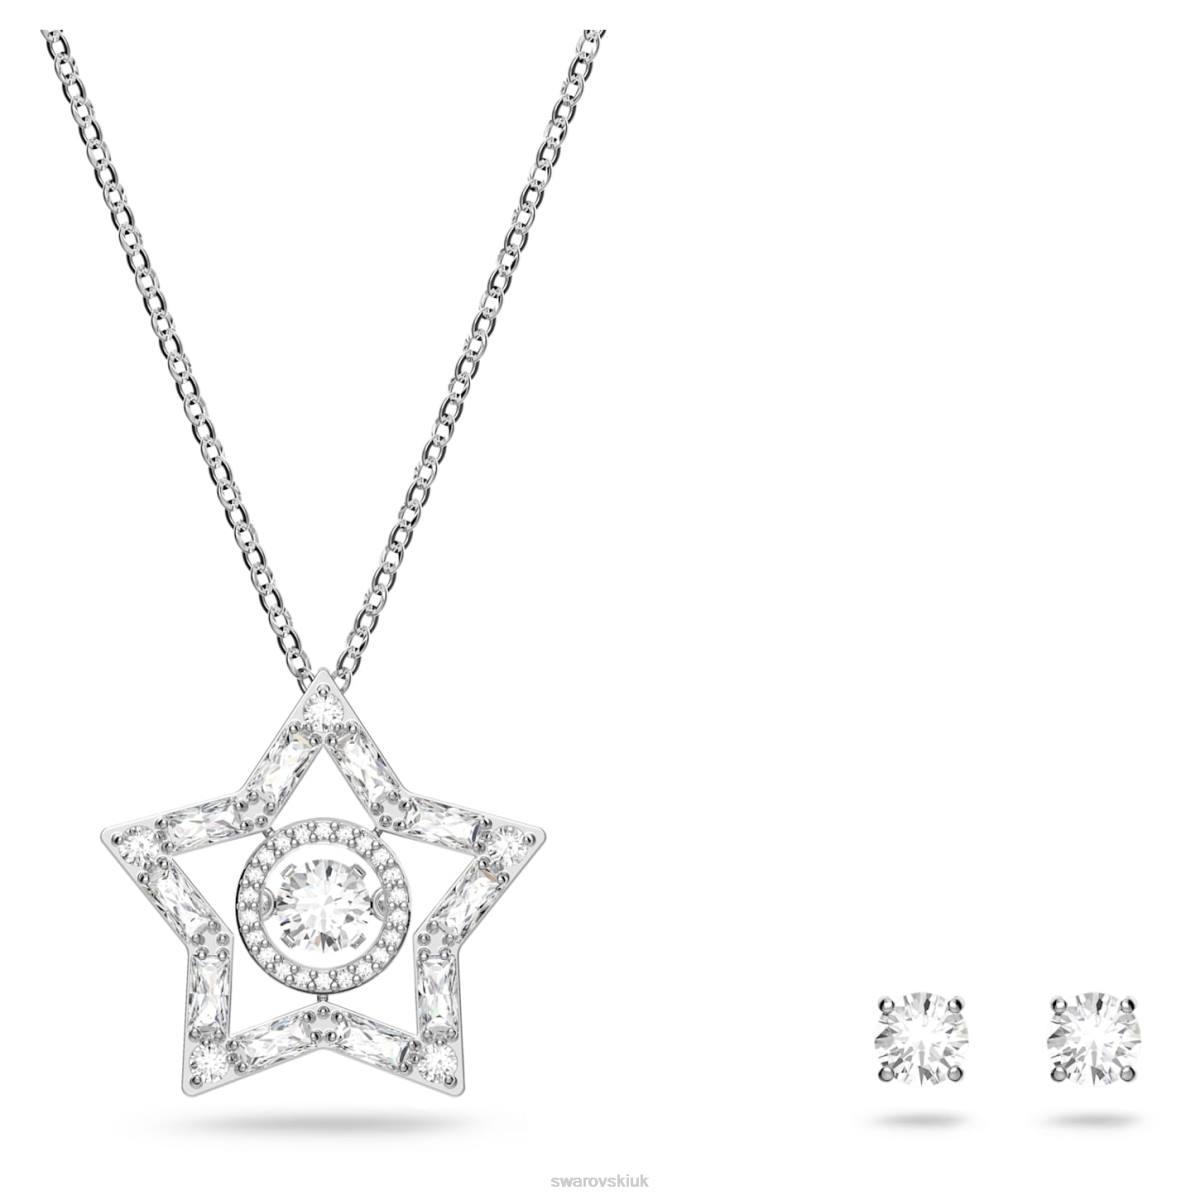 Jewelry Swarovski Stella set Mixed cuts, Star, White, Rhodium plated 48JX405